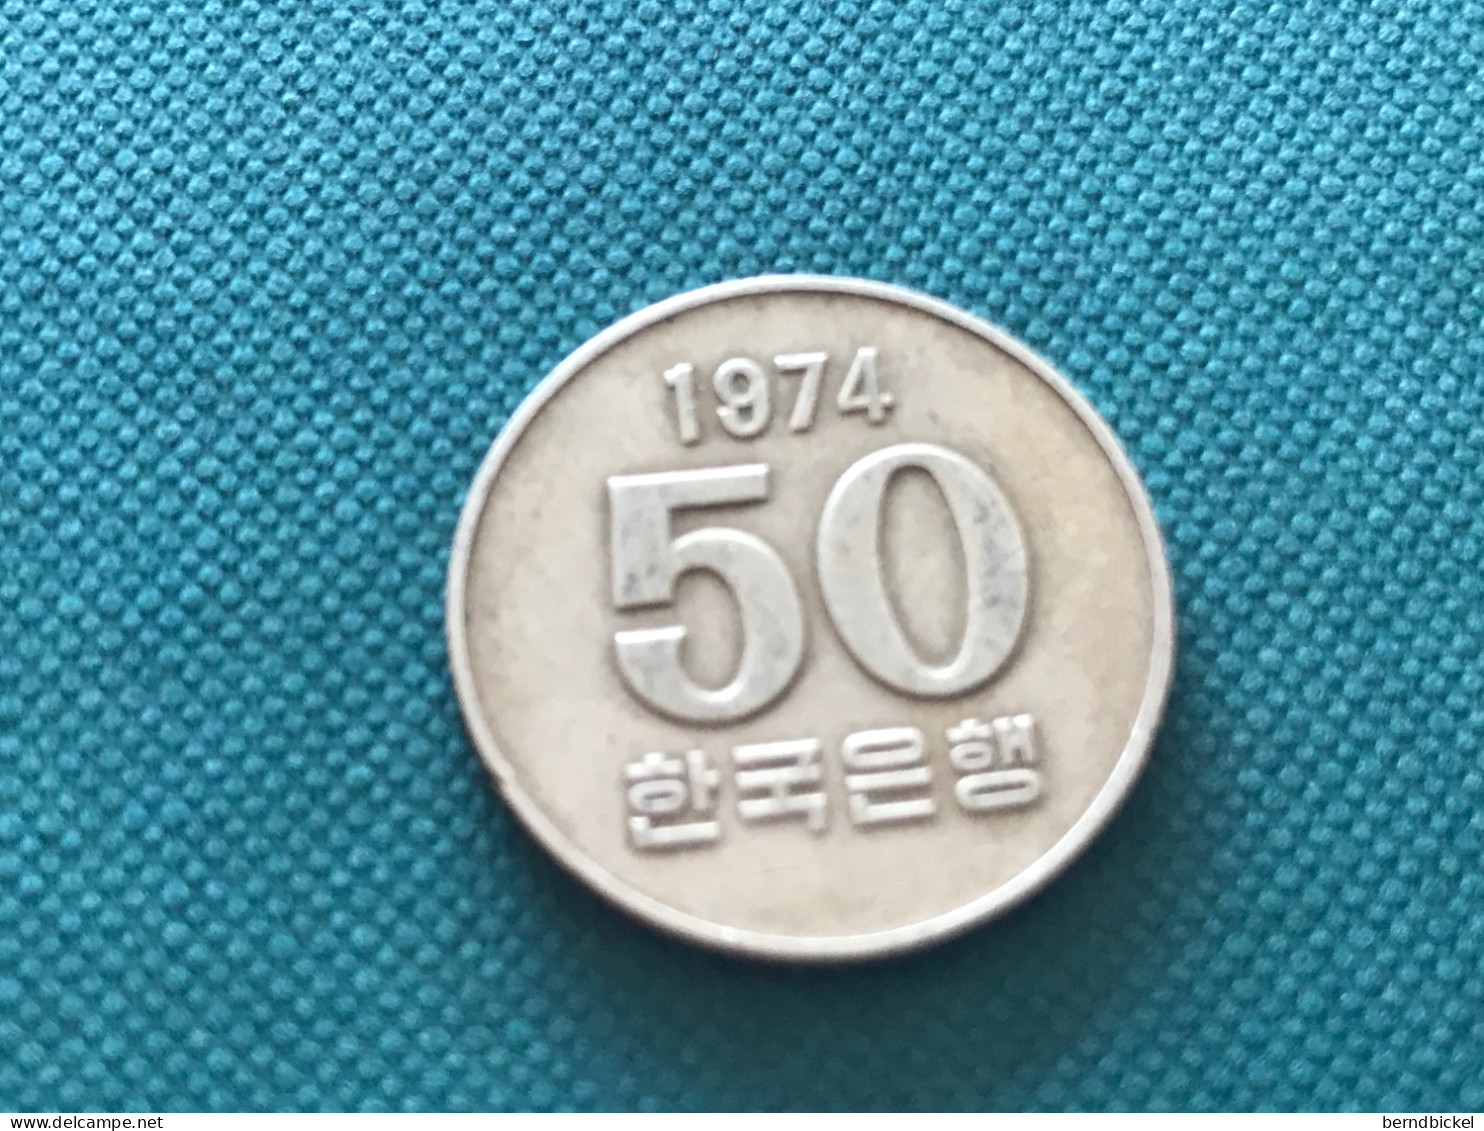 Münzen Münze Umlaufmünze Süd-Korea 50 Won 1974 - Coreal Del Sur